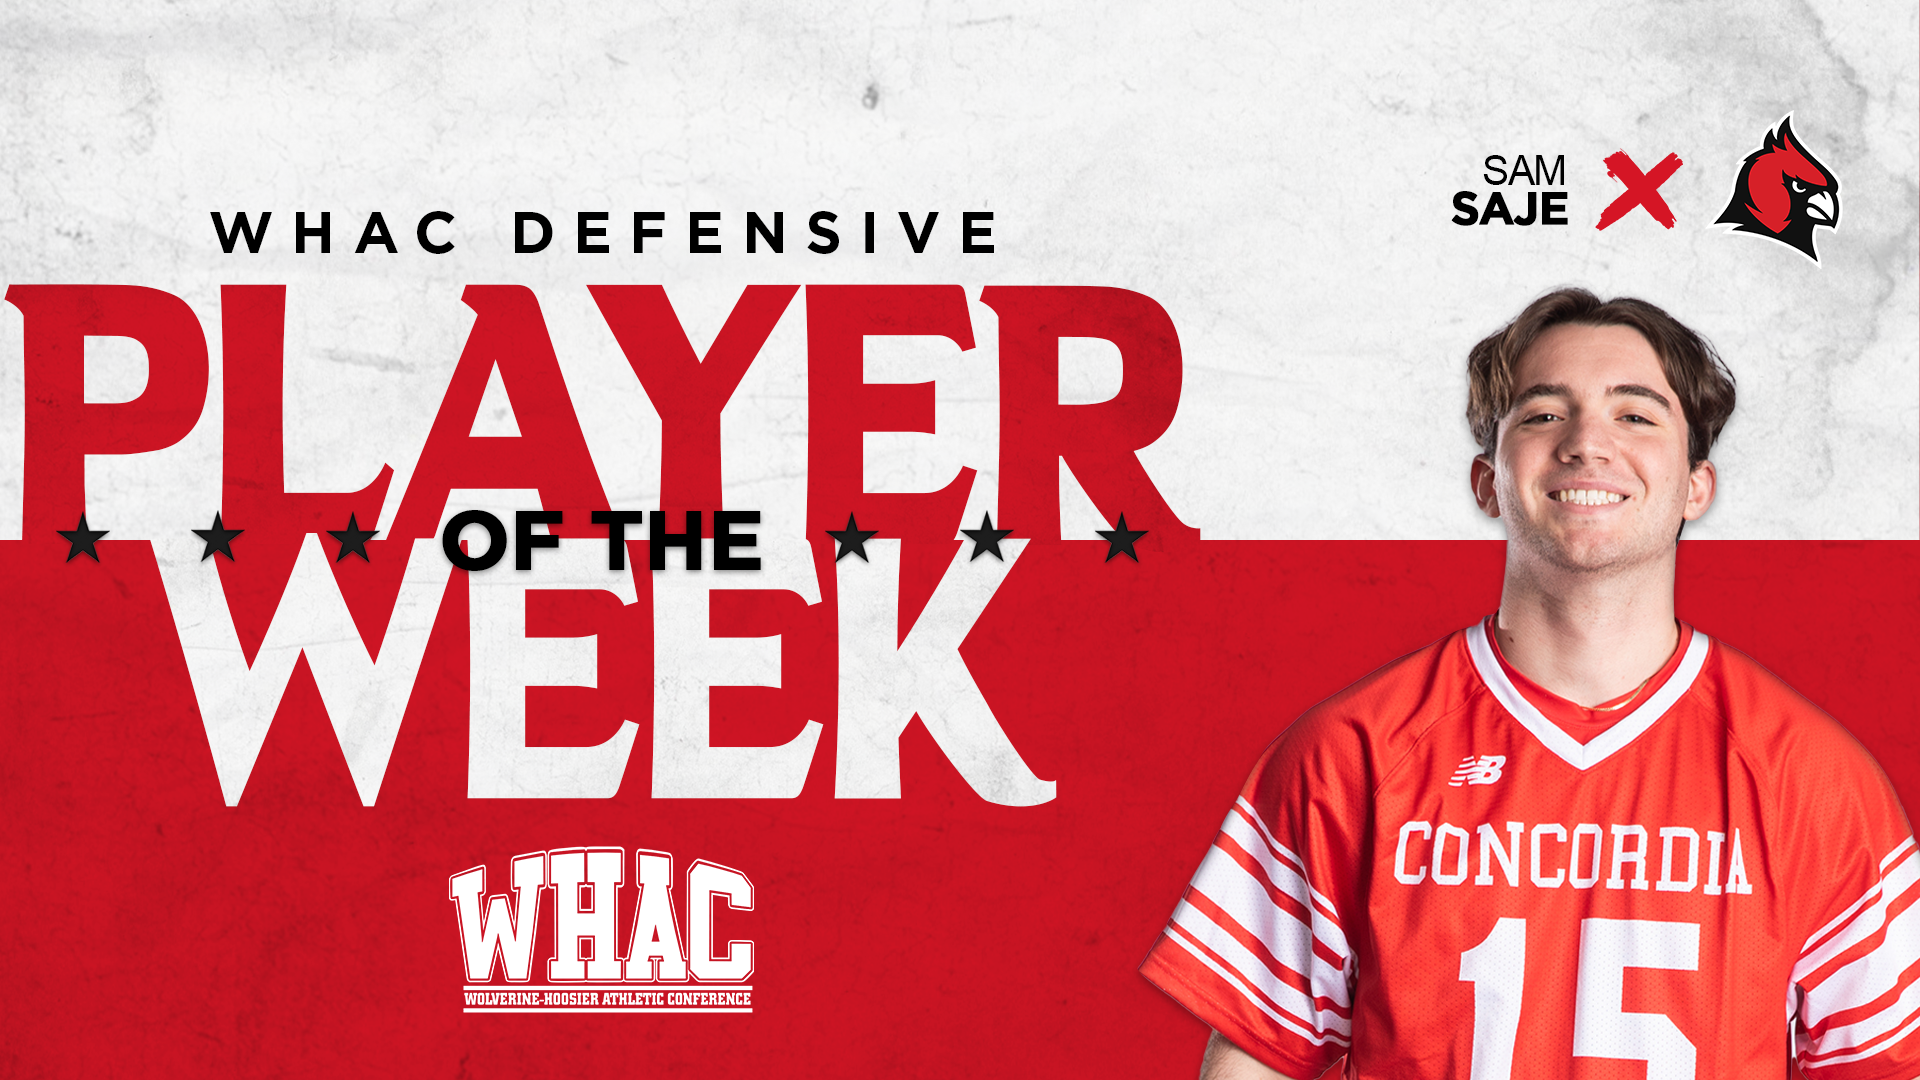 Sam Saje picks up WHAC Defensive Player of the Week honor